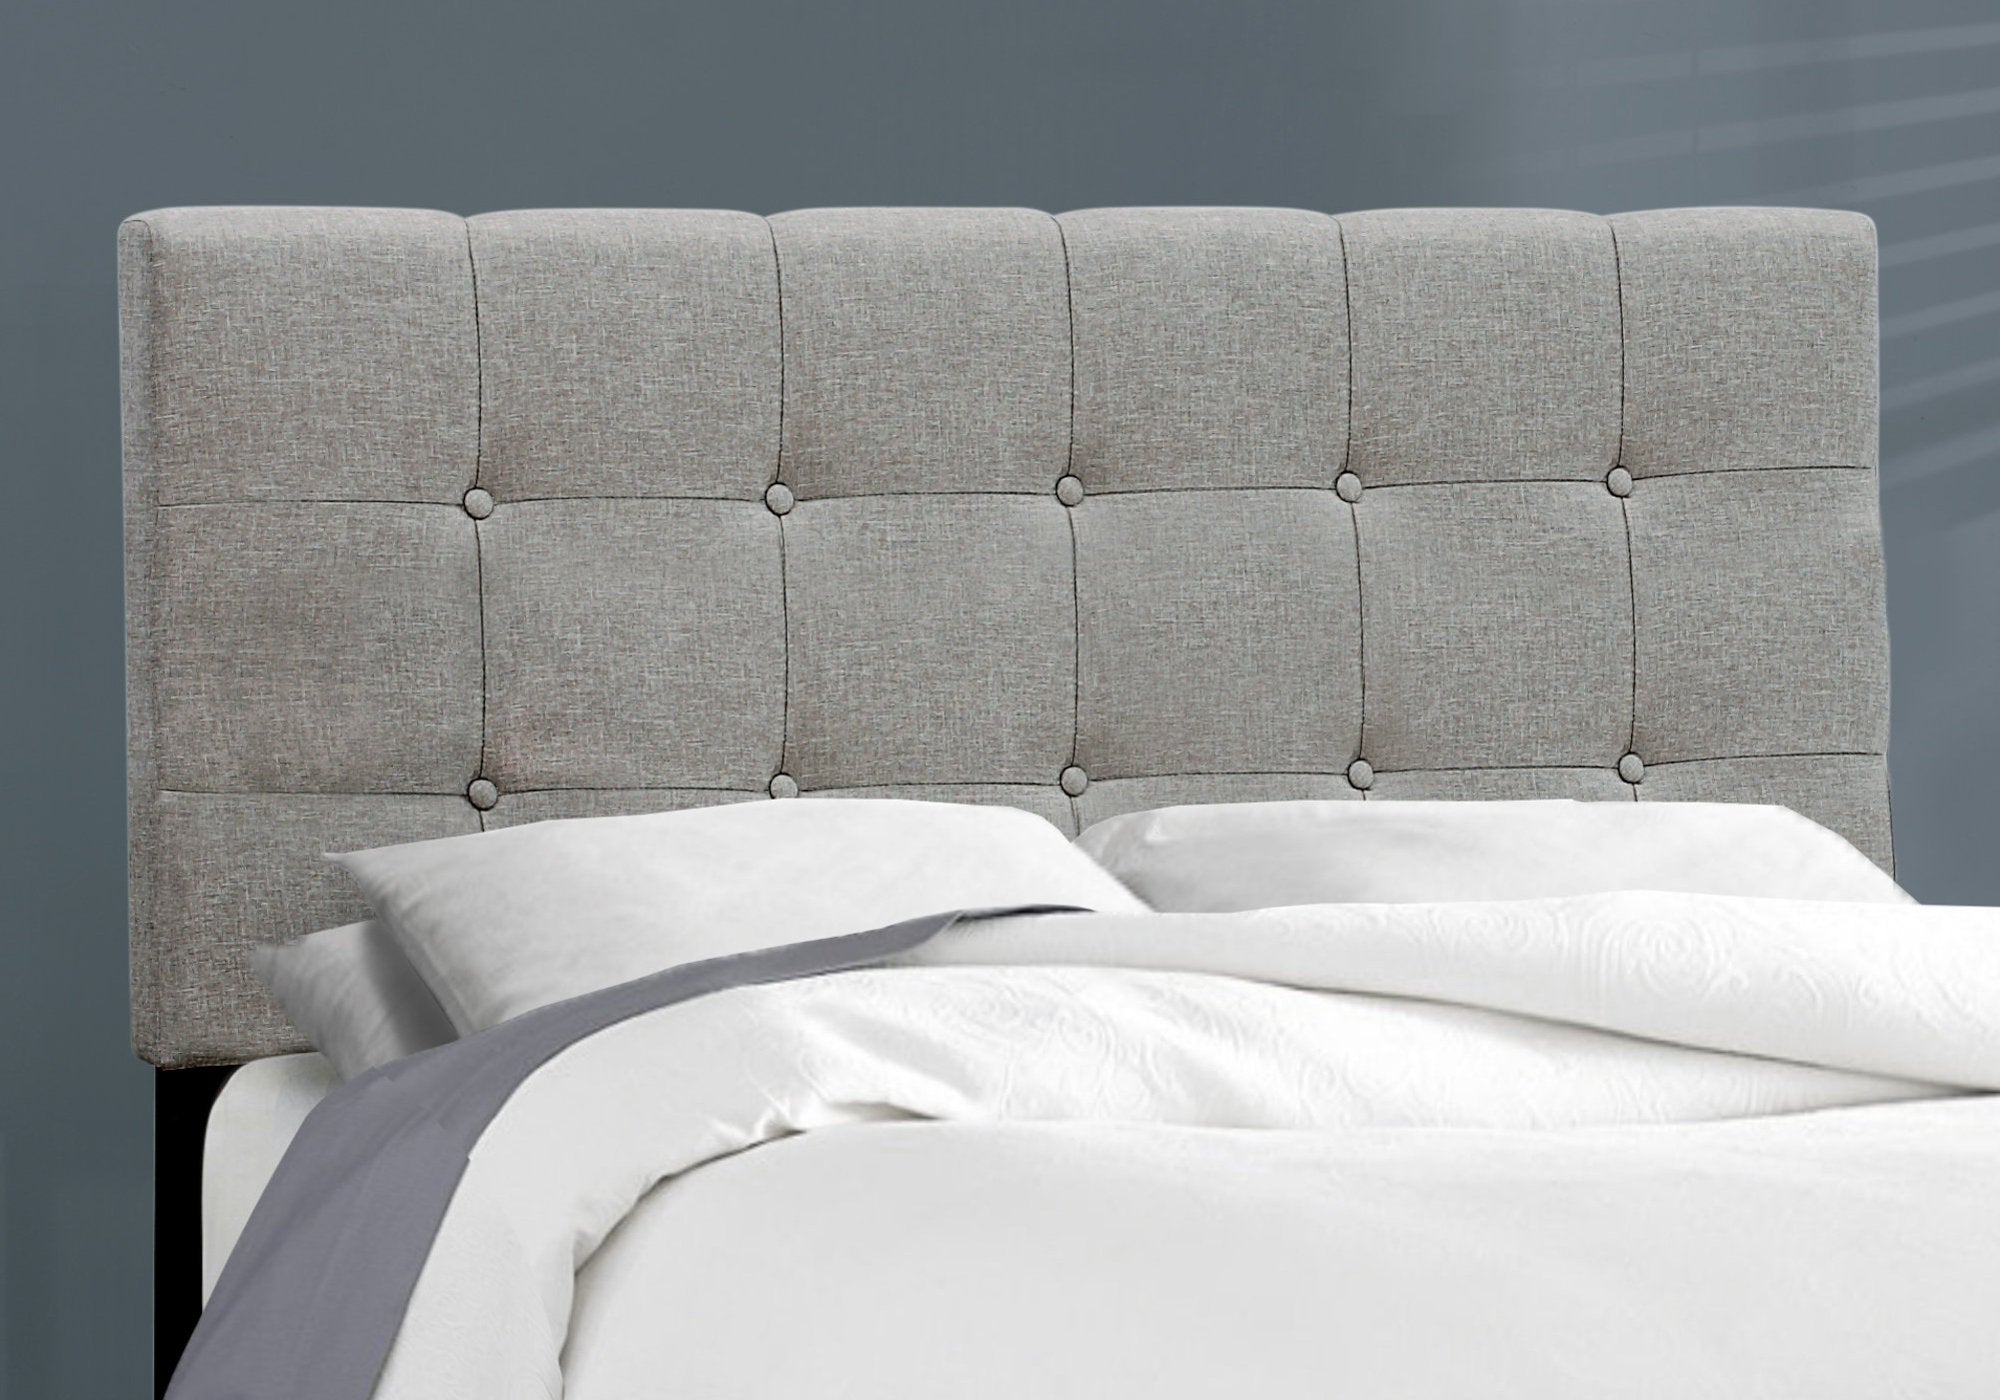 MN-925920F    Bed, Frame, Platform, Bedroom, Full Size, Upholstered, Linen Look Fabric, Wood Legs, Grey, Black, Contemporary, Modern